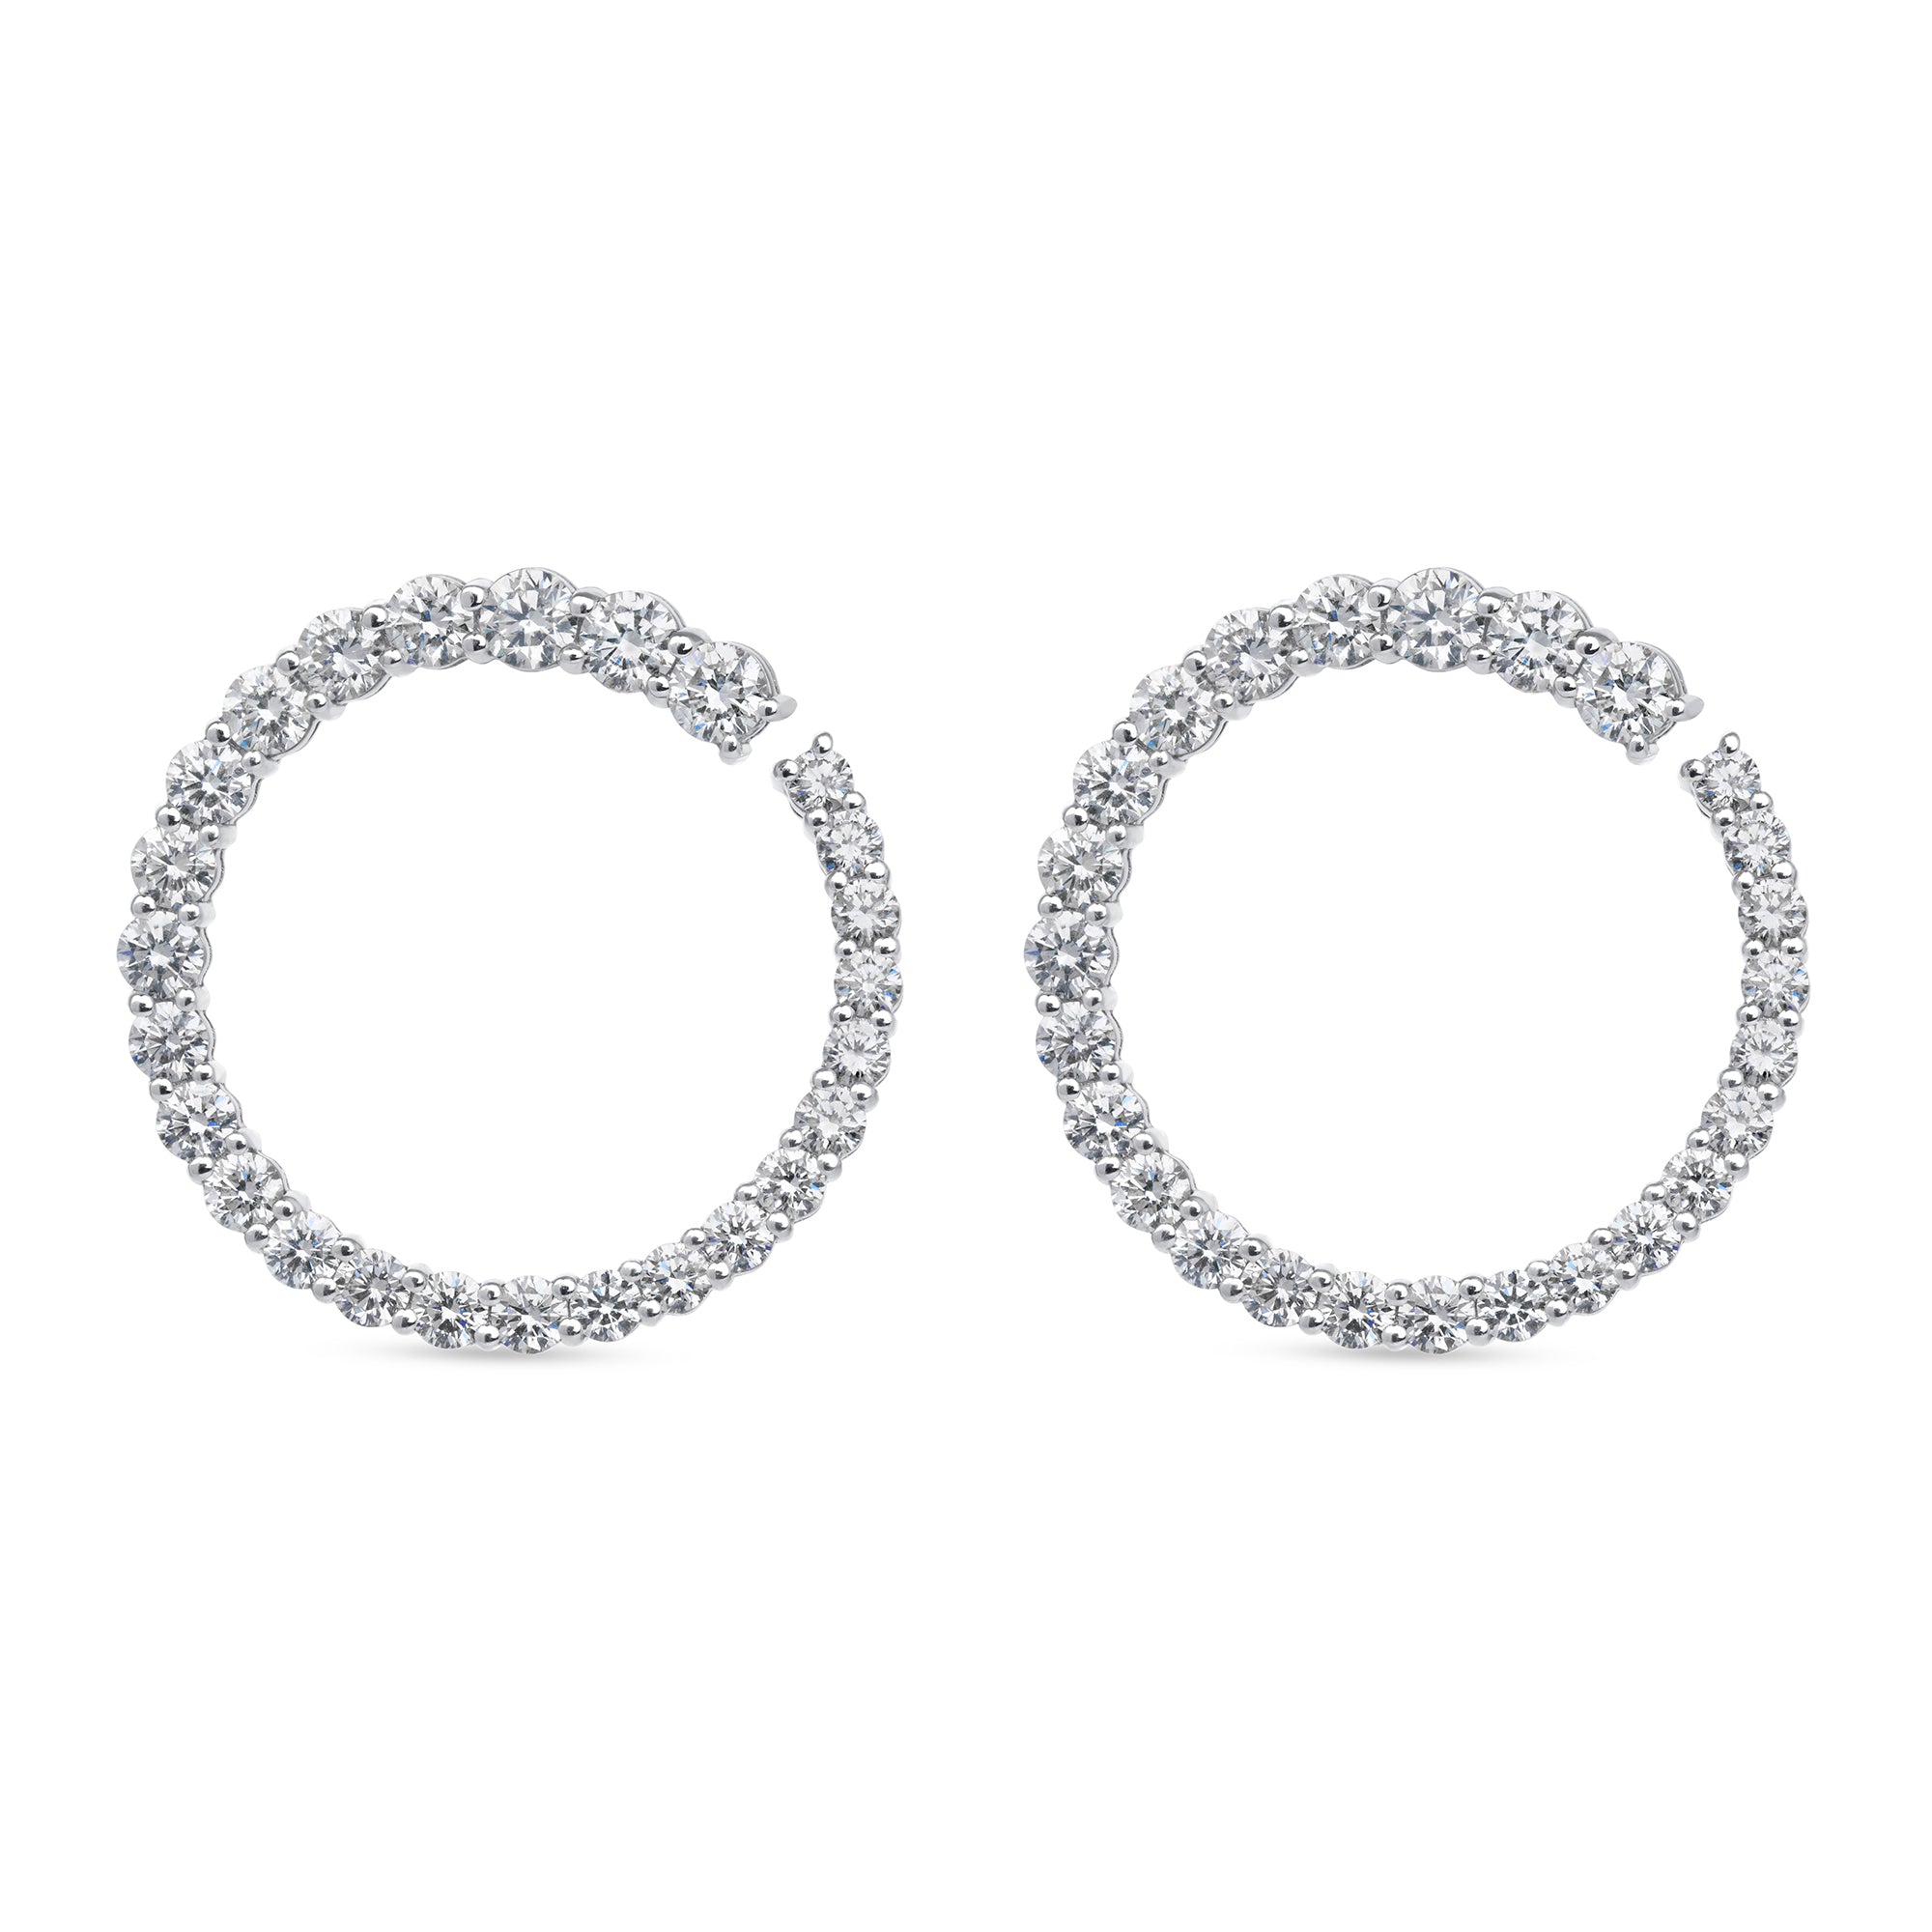 Graduated Round Cut Diamond Hoop Earrings in 18 Karat White Gold